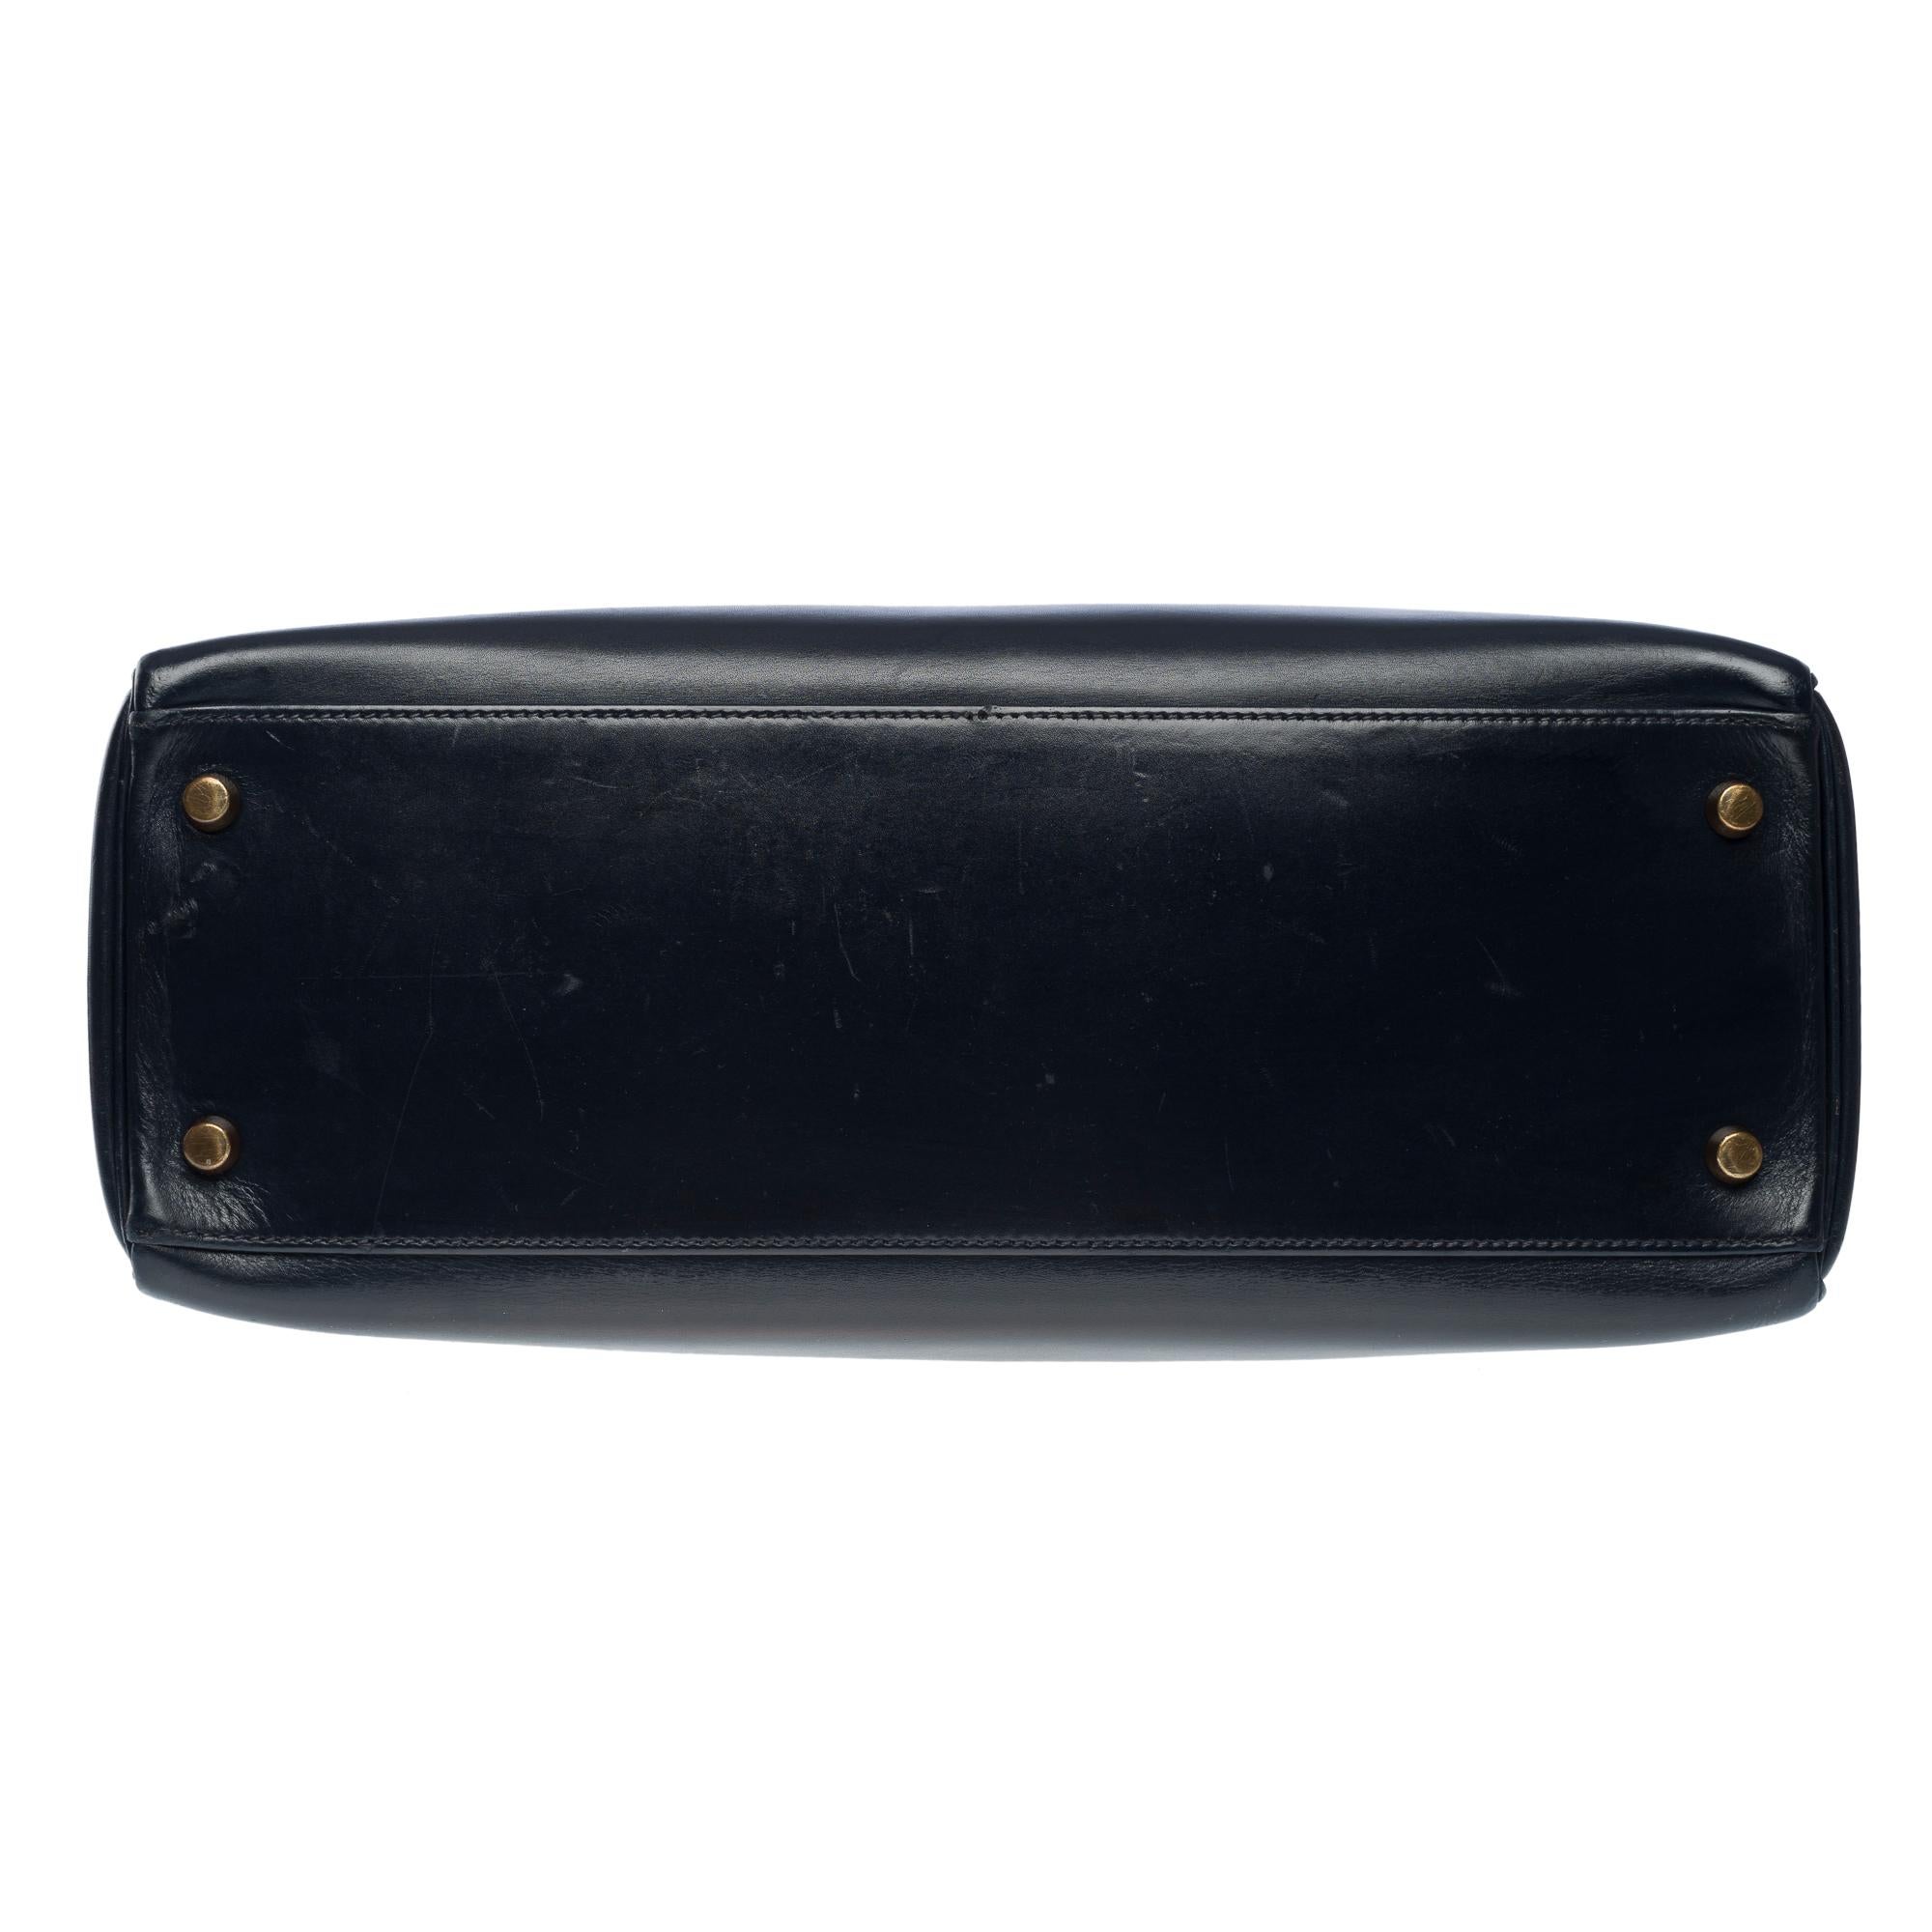 Hermès Kelly 32 retourne handbag strap in Navy Blue box calfskin leather, GHW 6